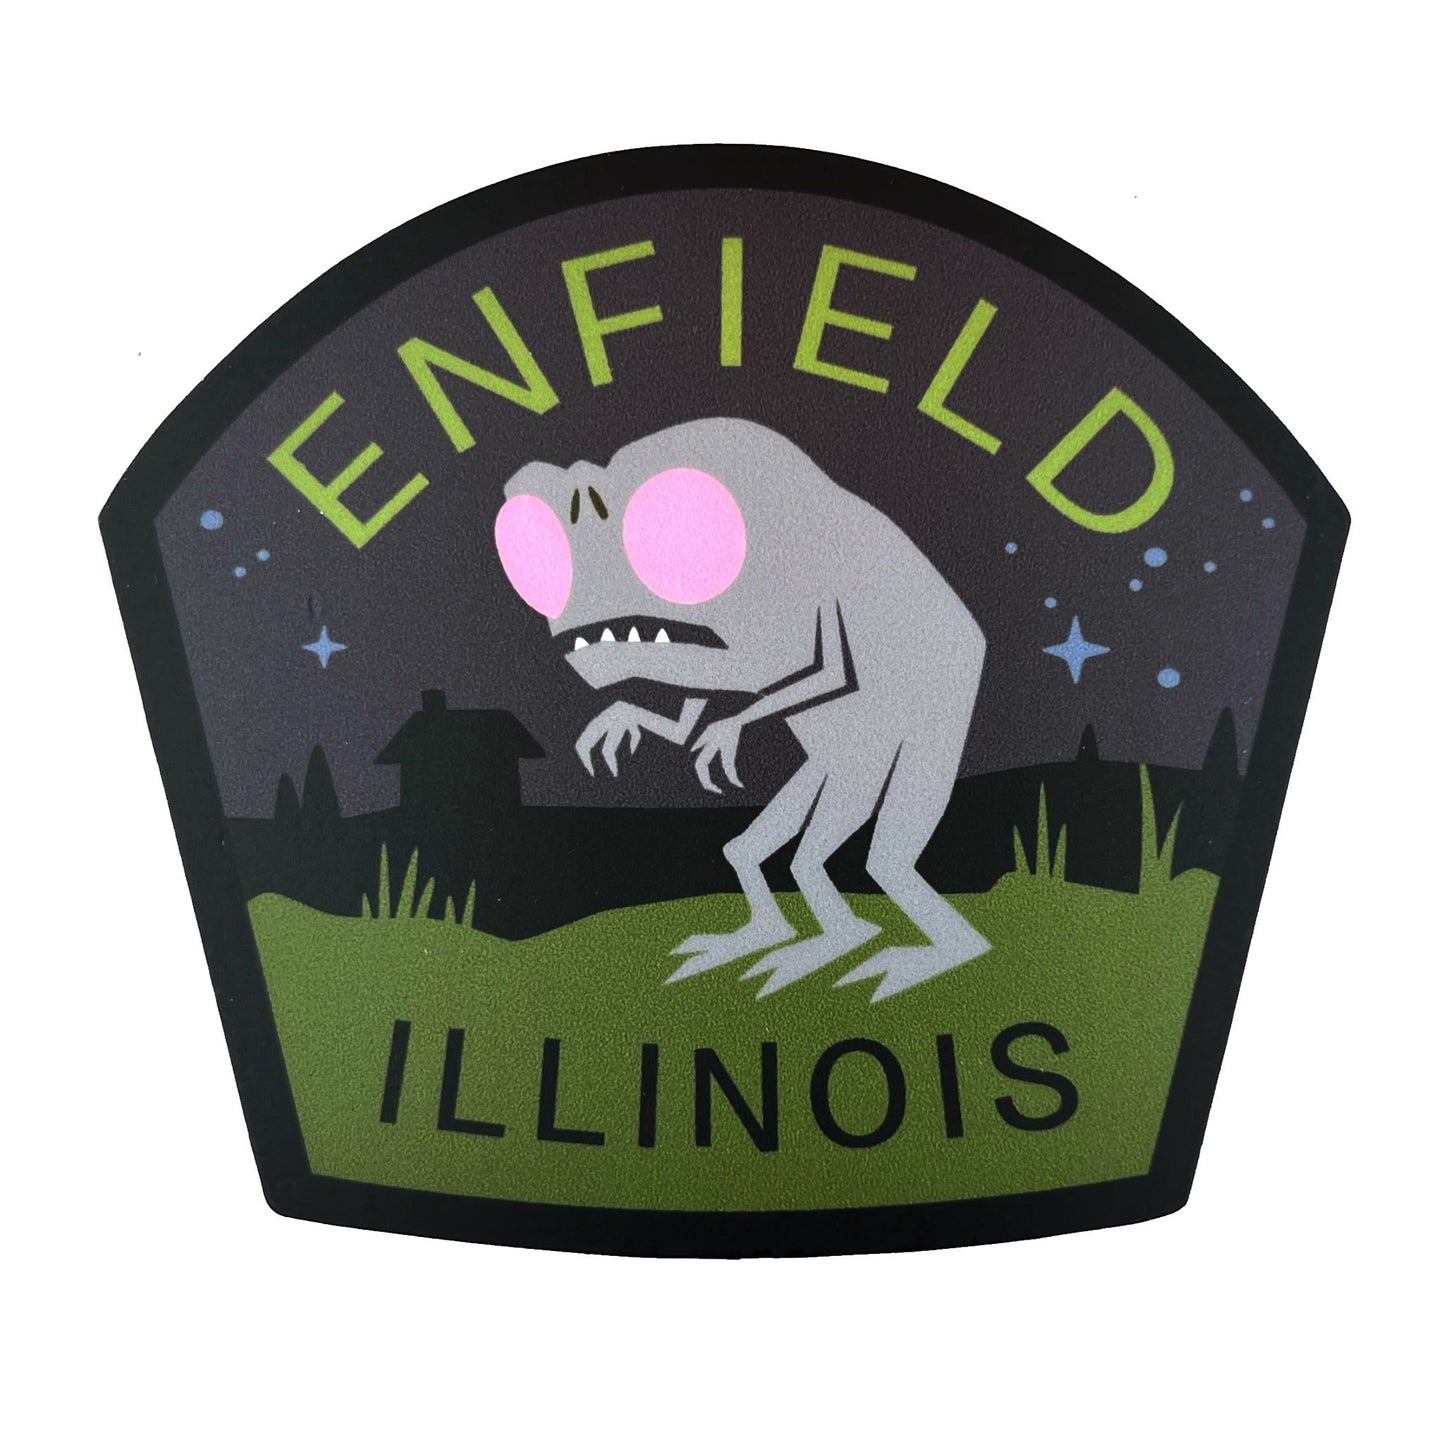 Enfield, Illinois Travel Sticker